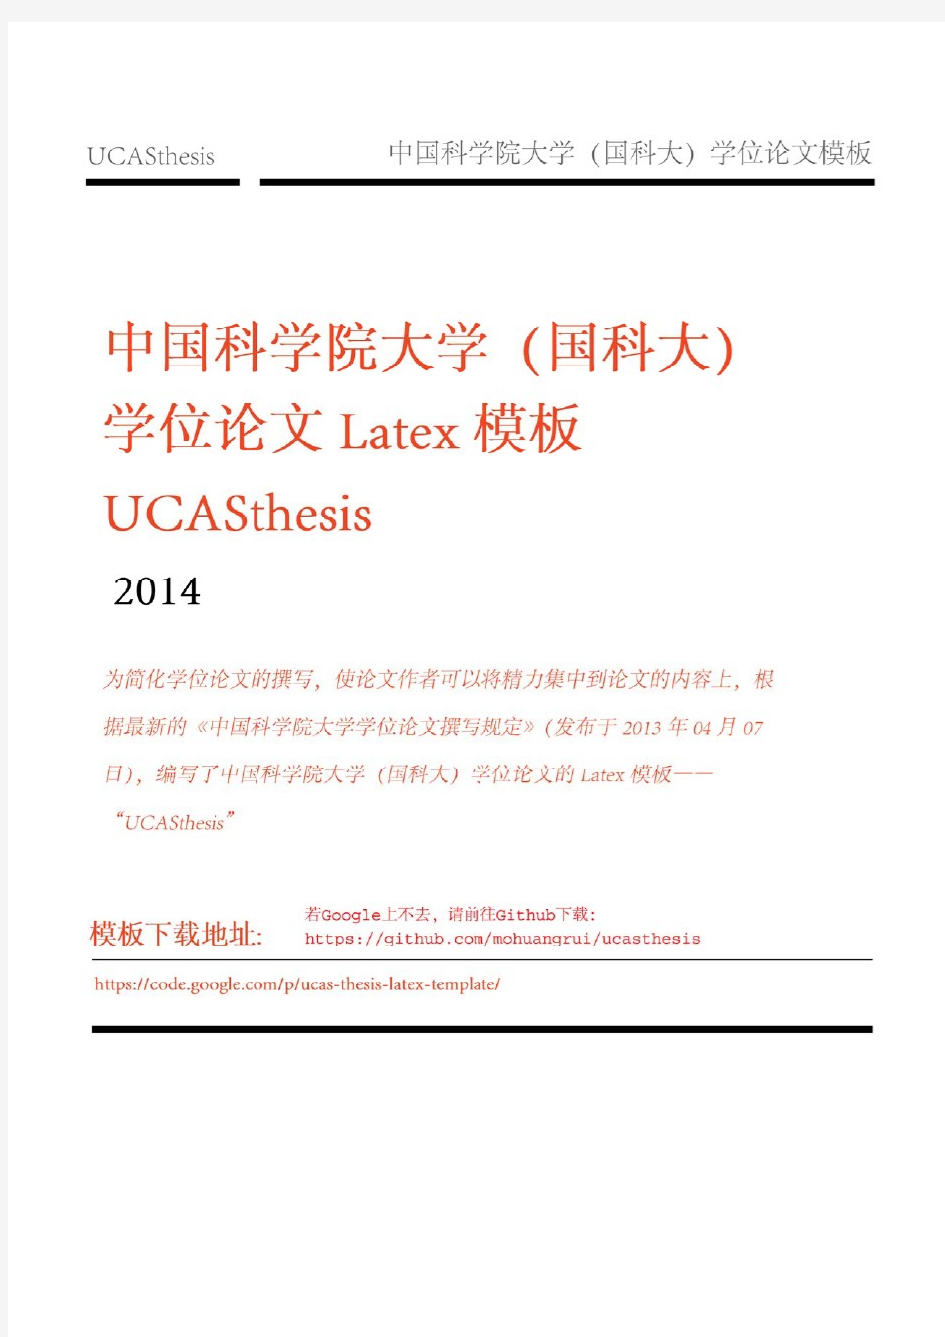 ucasthesis中国科学院大学(国科大)学位论文模板